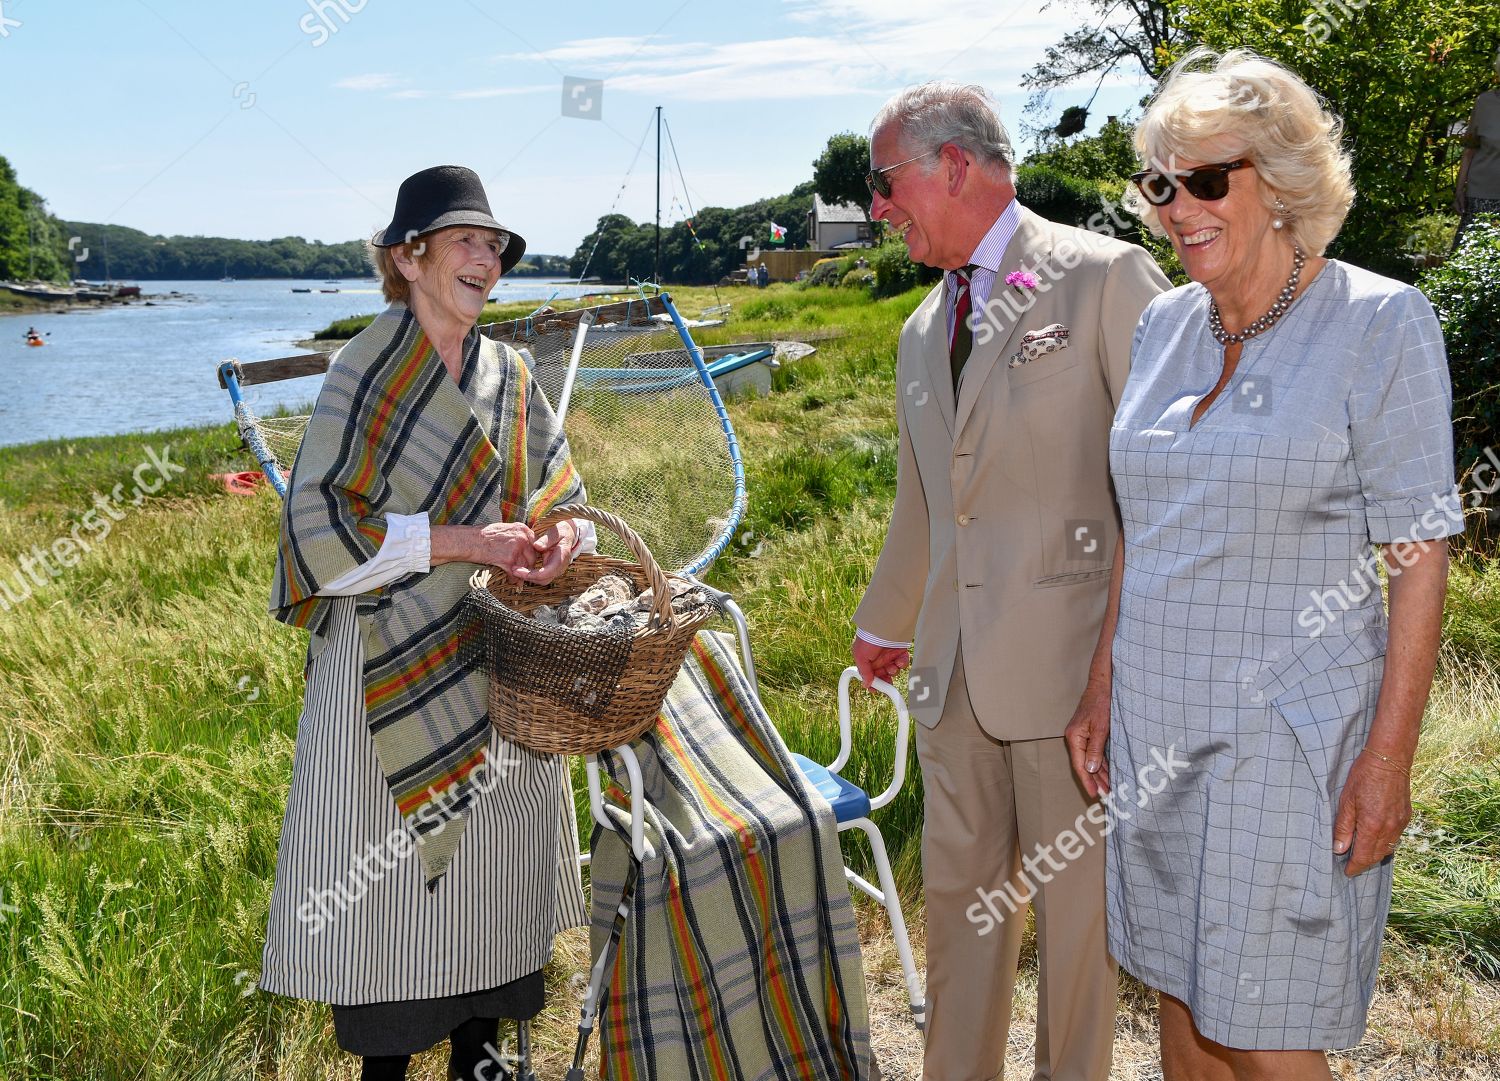 prince-charles-and-camilla-duchess-of-cornwall-visiting-to-wales-day-2-uk-shutterstock-editorial-9733343at.jpg